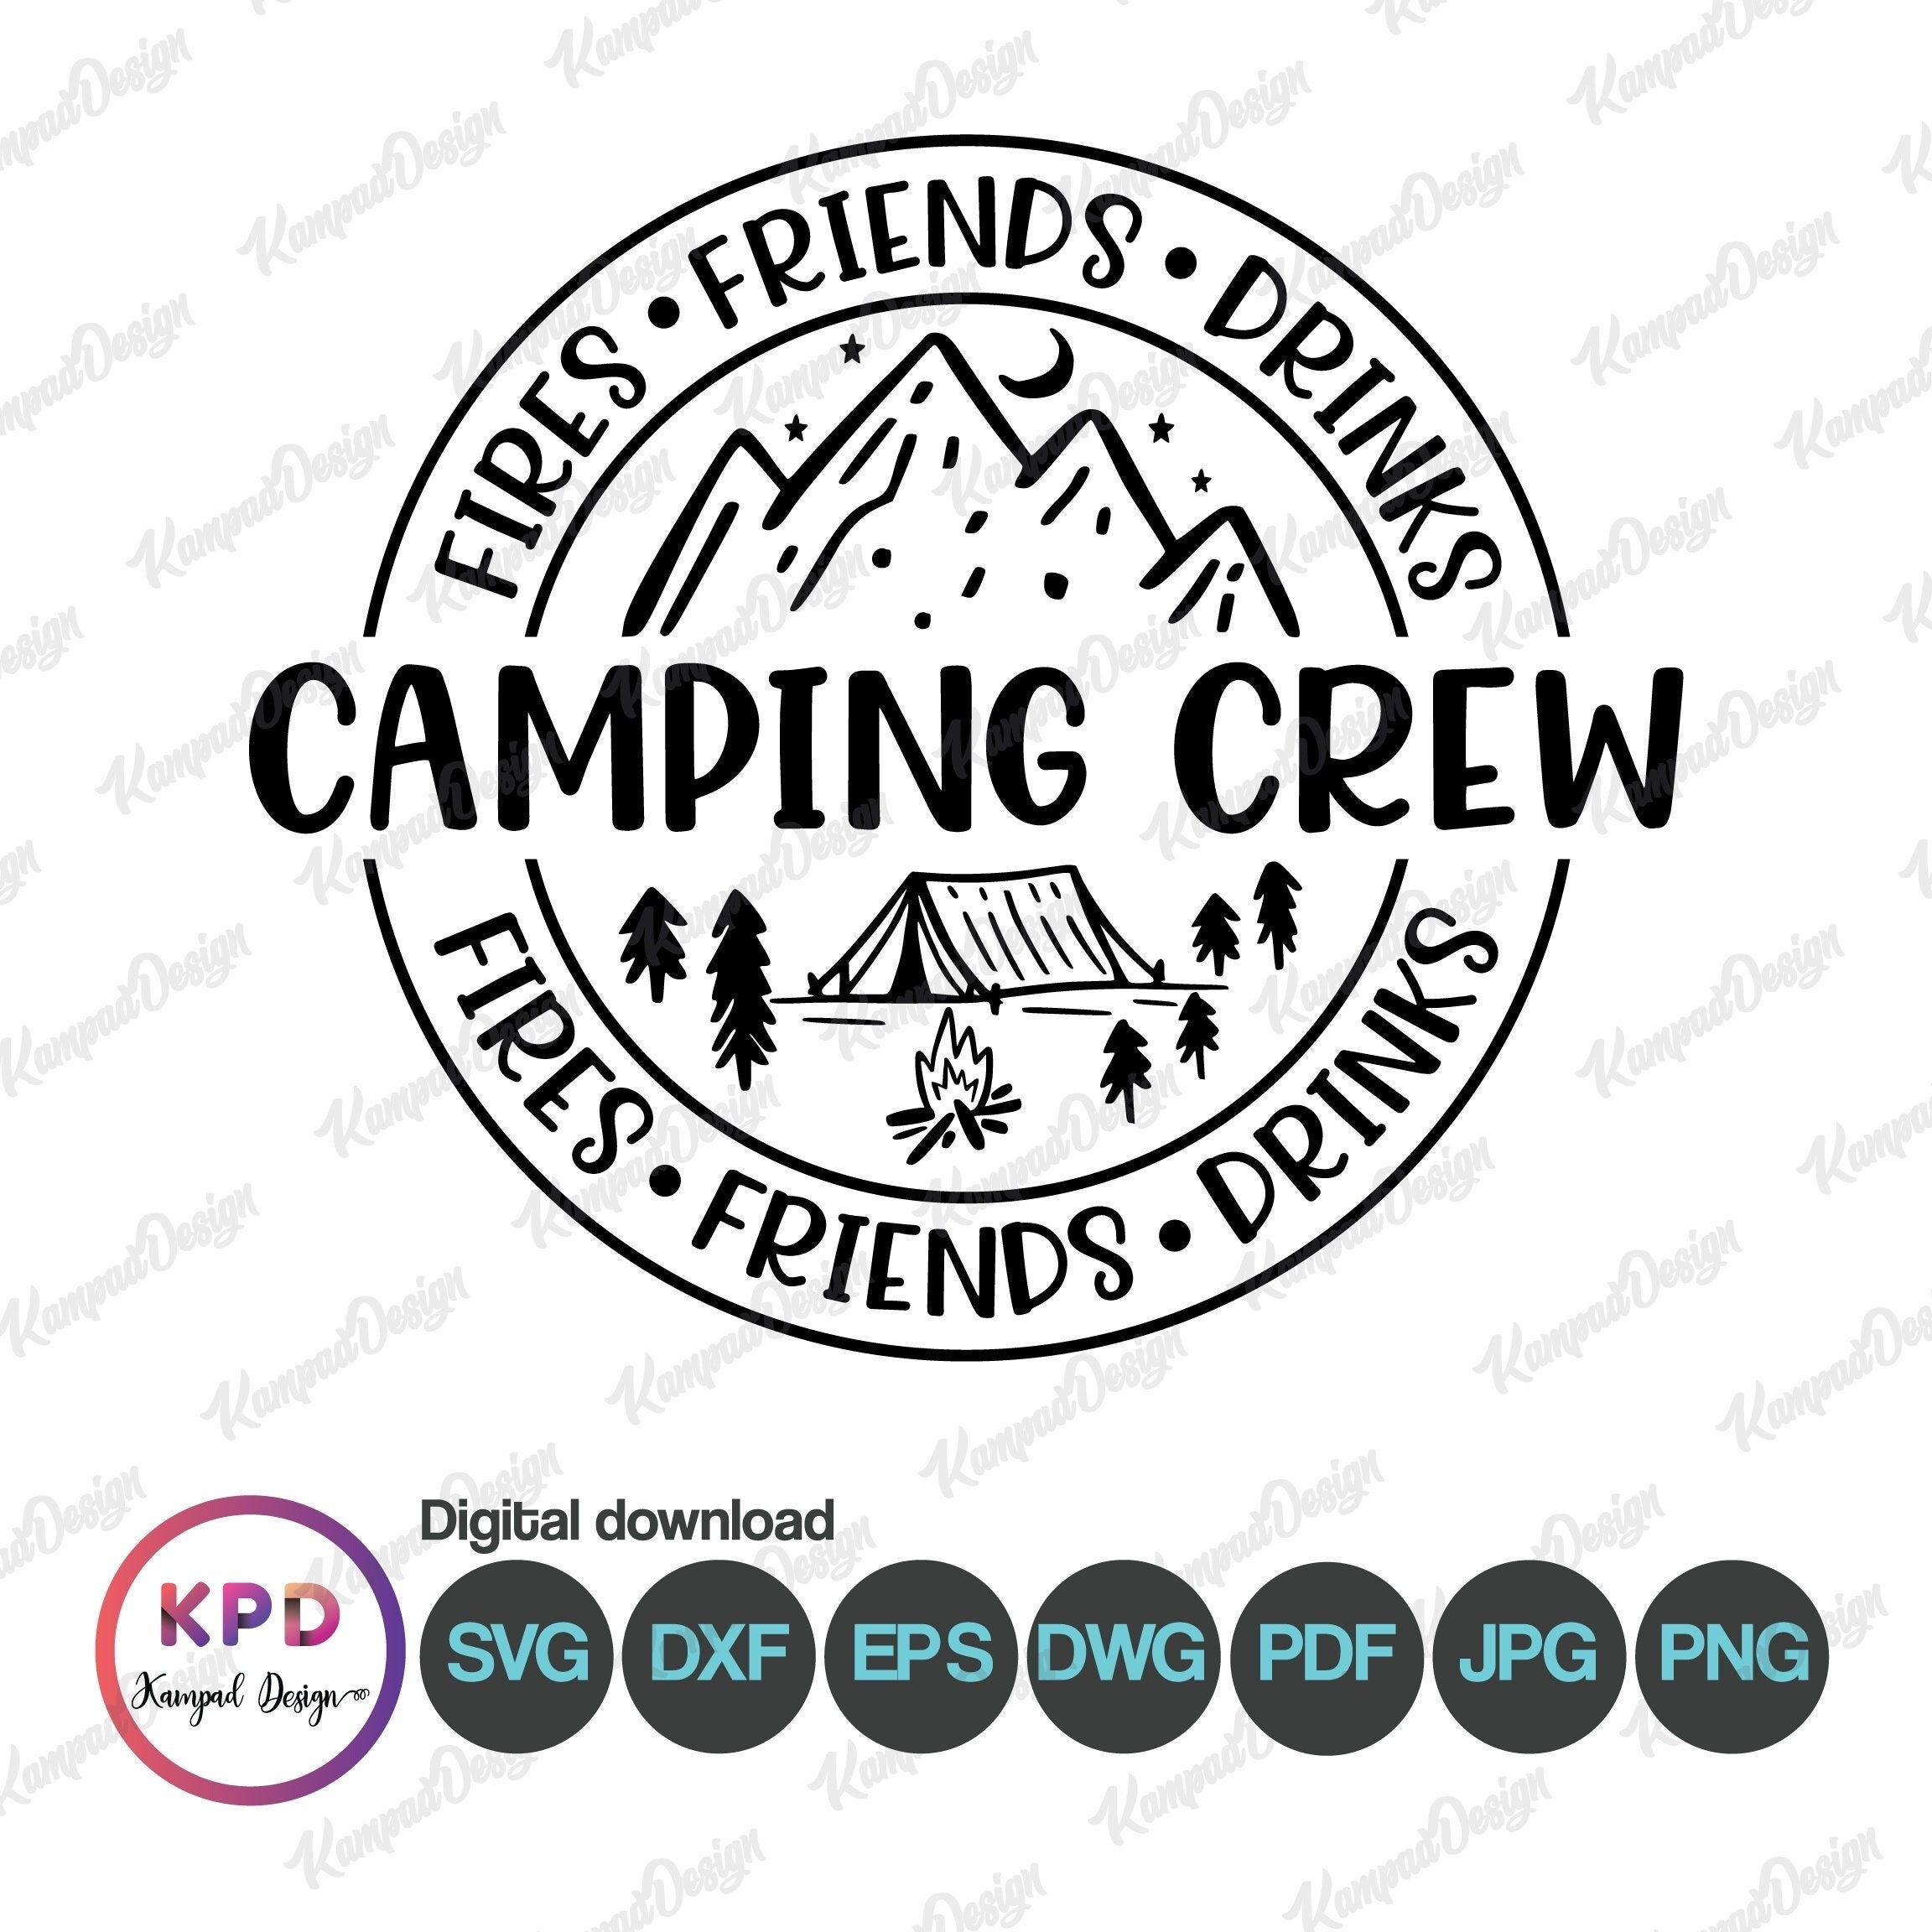 Camping Crew SVG | Camp Life Svg | Camping SVG | Family Camping Svg | Summer Camping Svg | Sublimation Design | clipart | Digital File